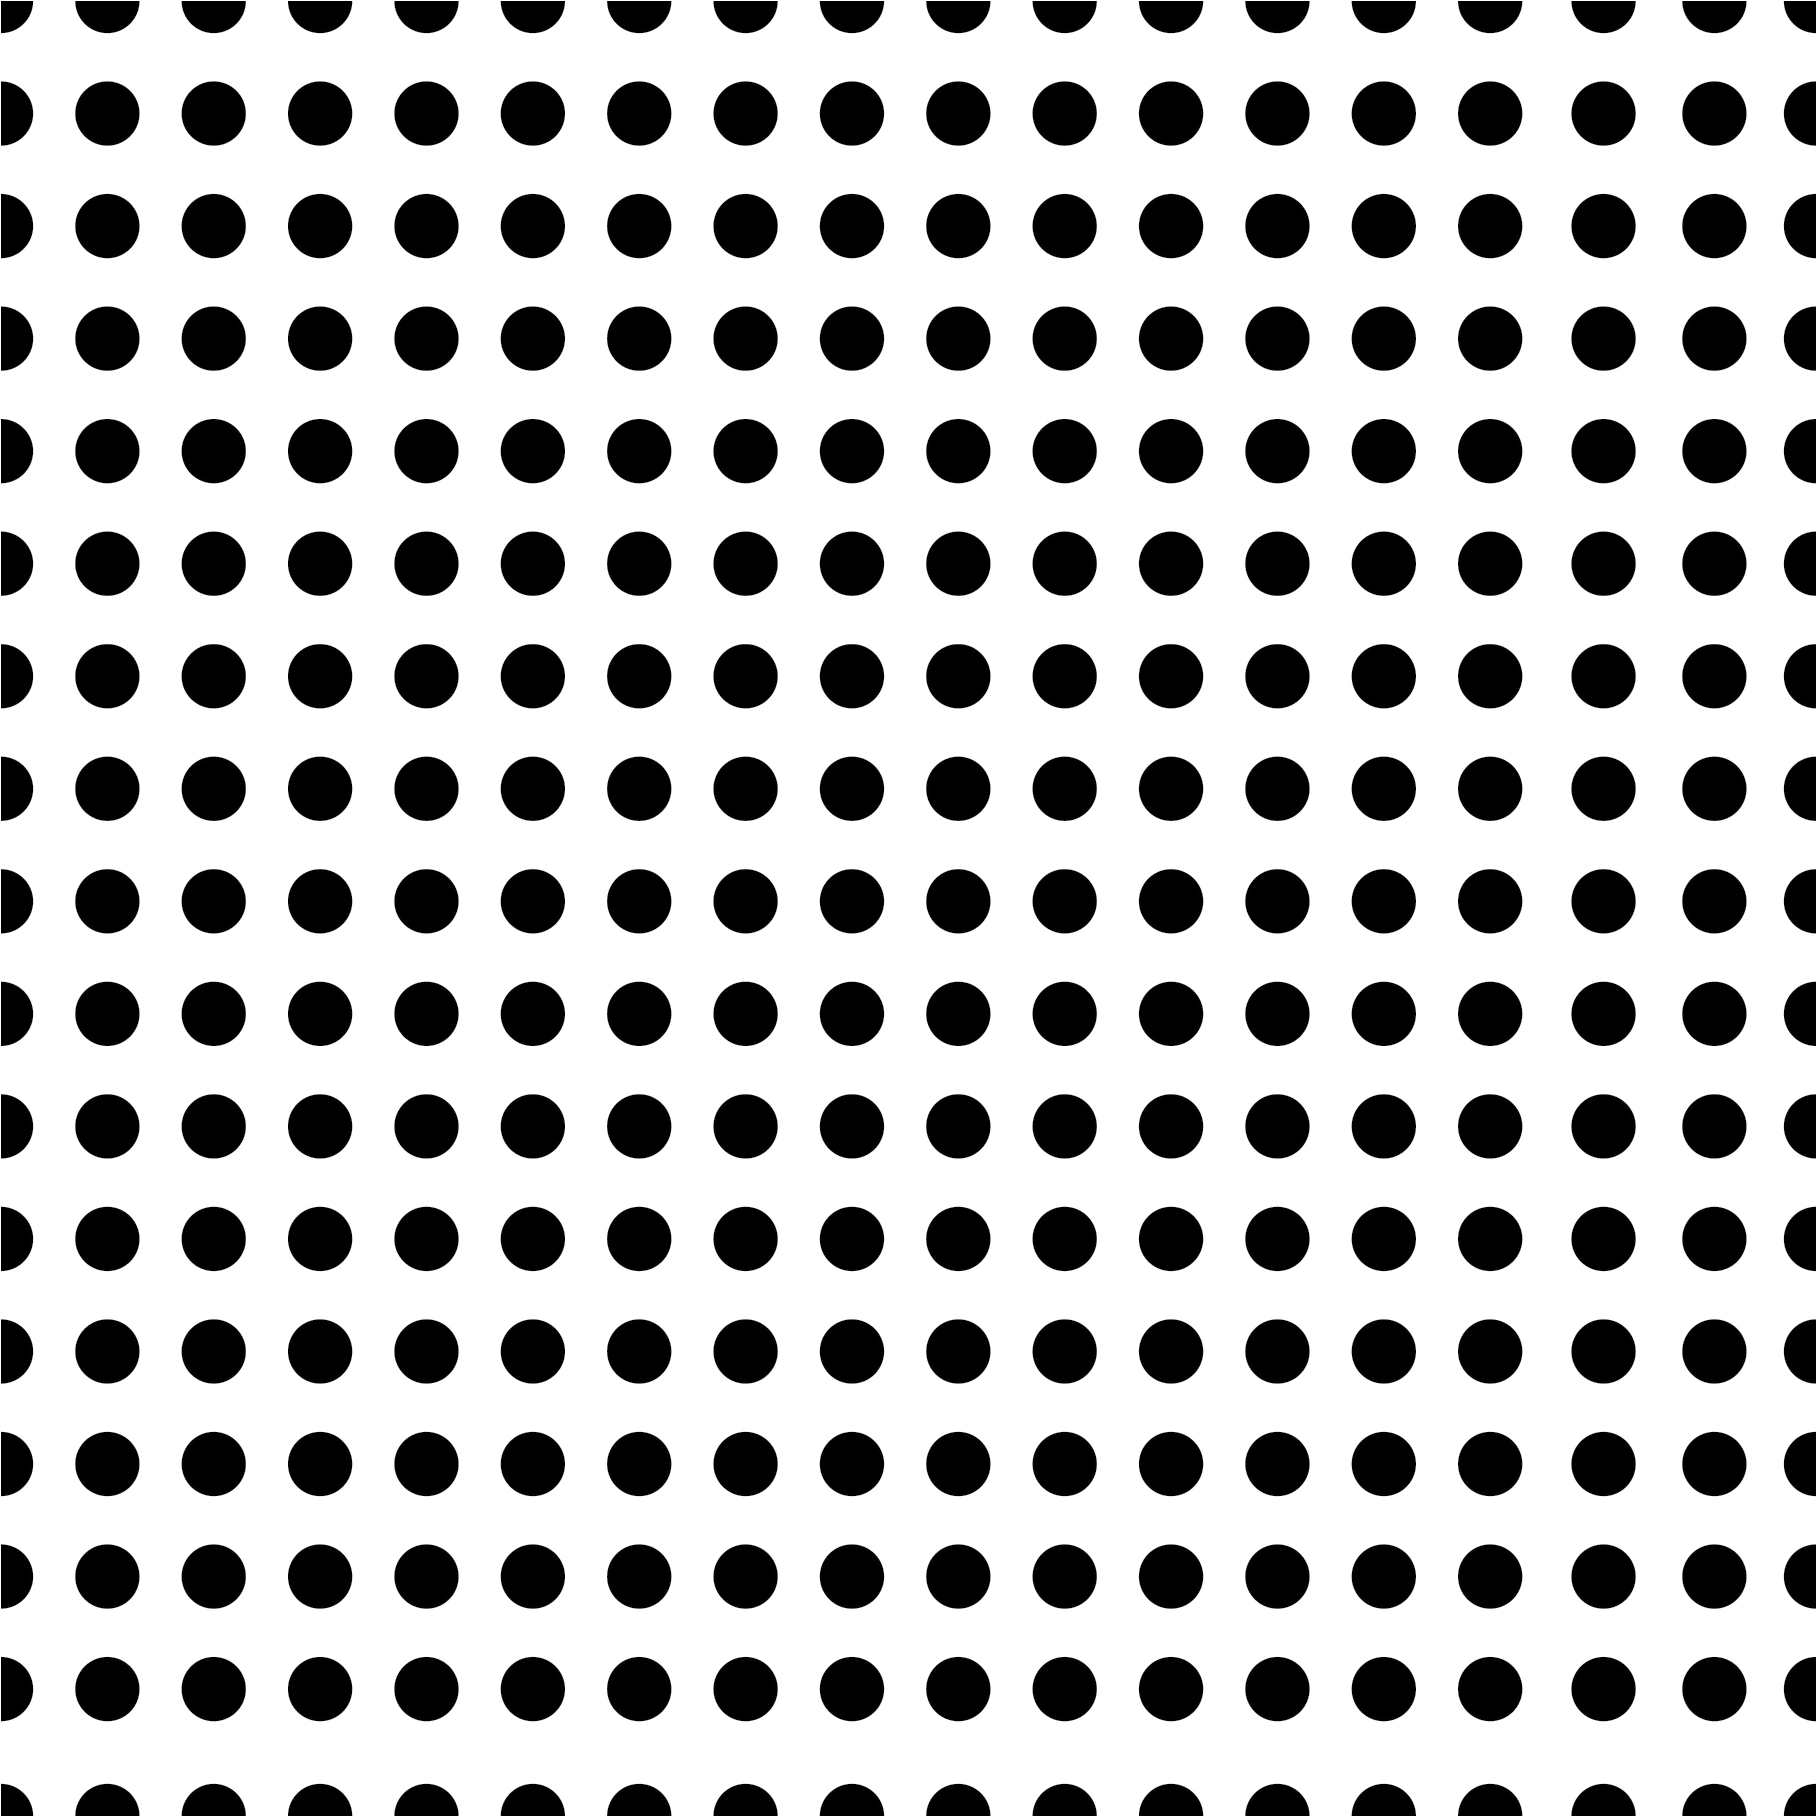 Craft HTV Black and White Polka Dot Pattern